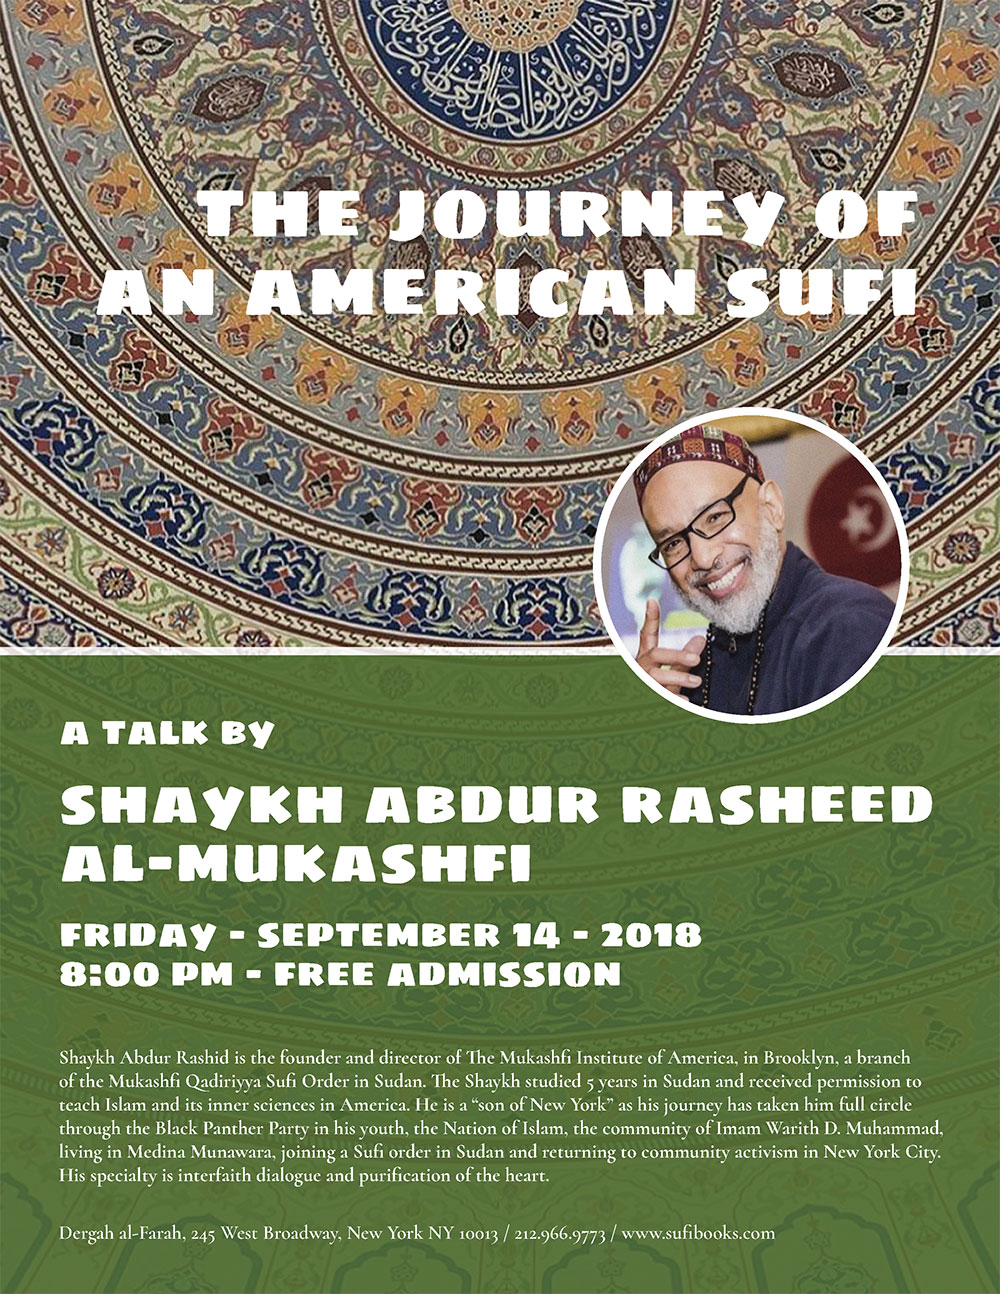 Friday, September 14, 2018 | The Journey of an American Sufi | A talk by Shaykh Abdur Rasheed al-Mukashfi | 8:00 pm | Free Admission